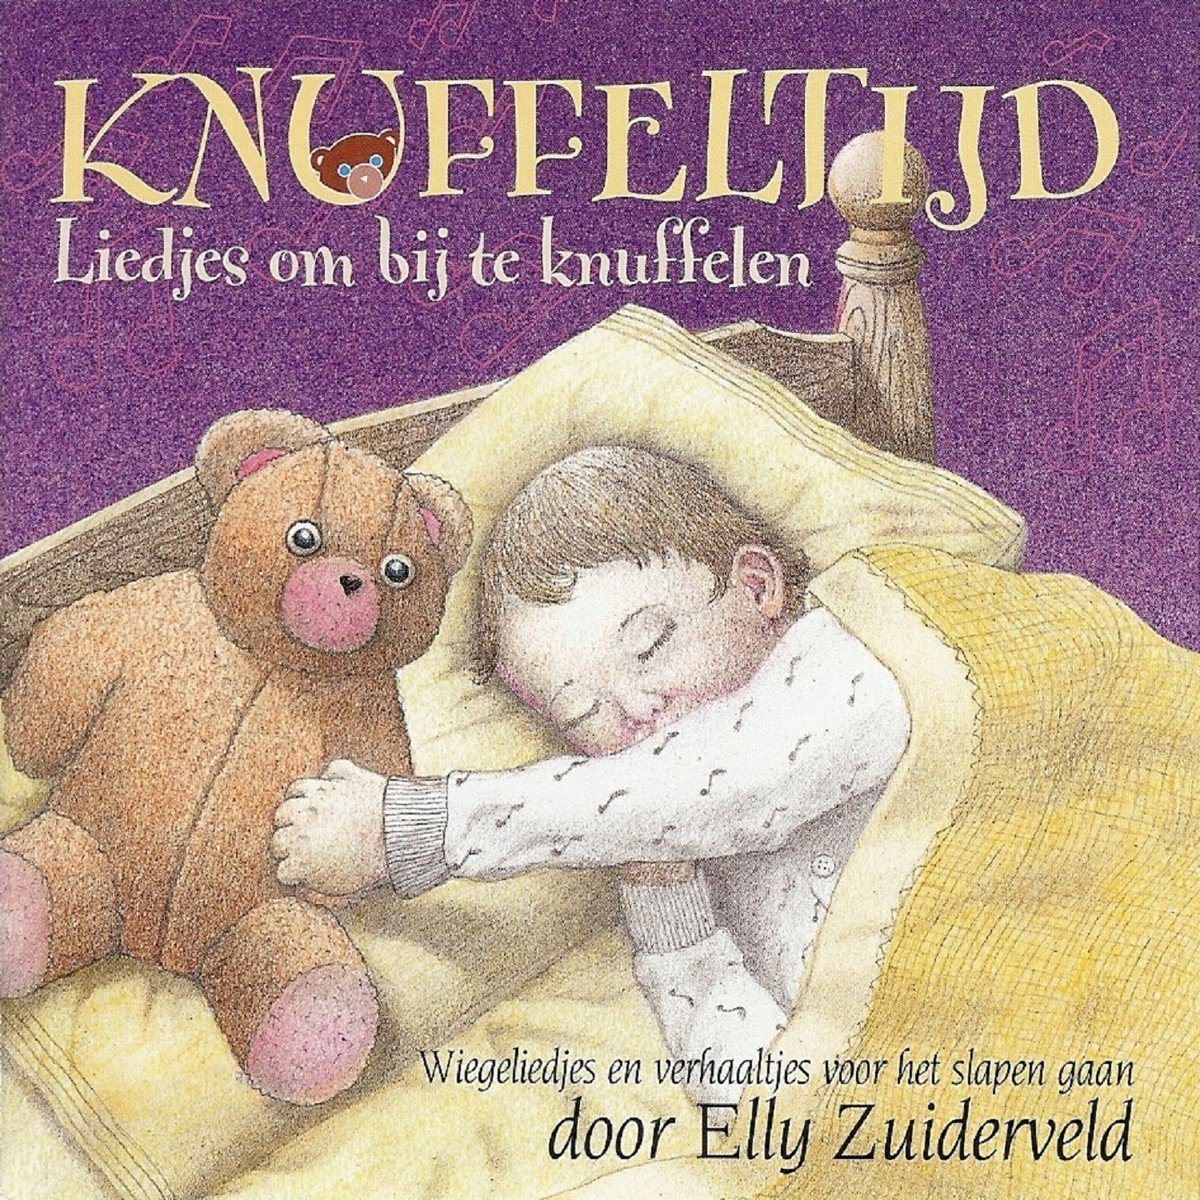 Kinderliedjes - Knuffeltijd (18 Tracks) (CD) - Kinderliedjes